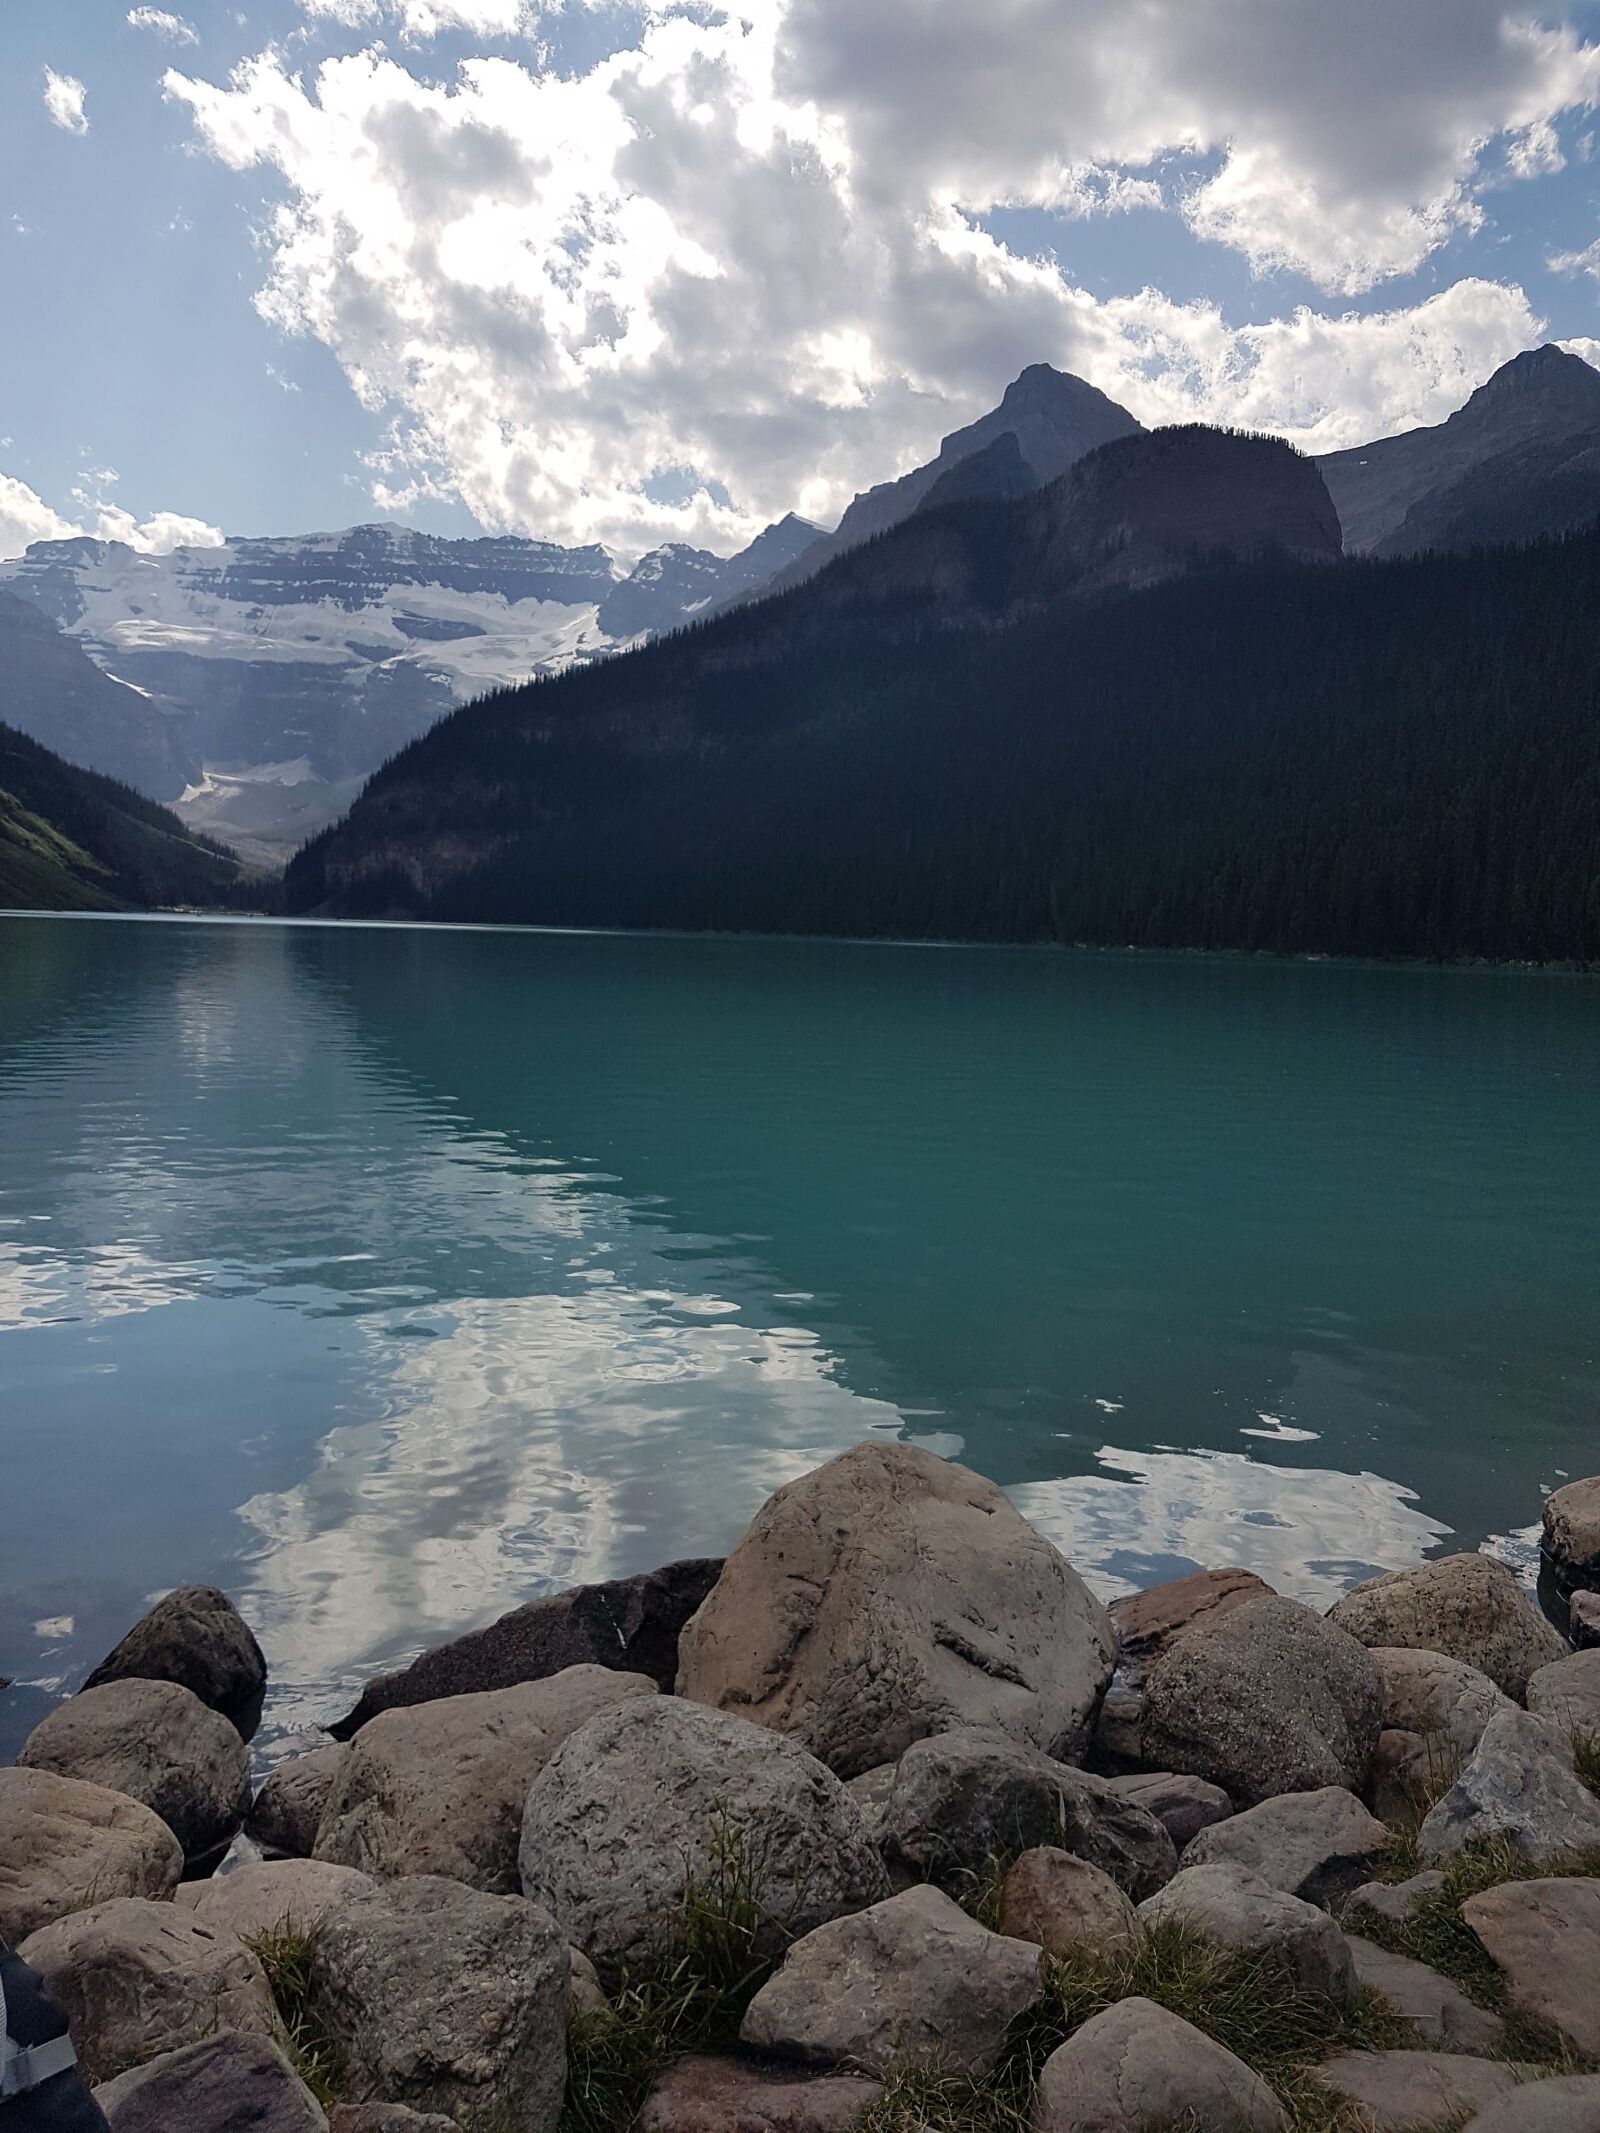 Samsung Galaxy S7 sample photo. Mountain, lake, landscape photography